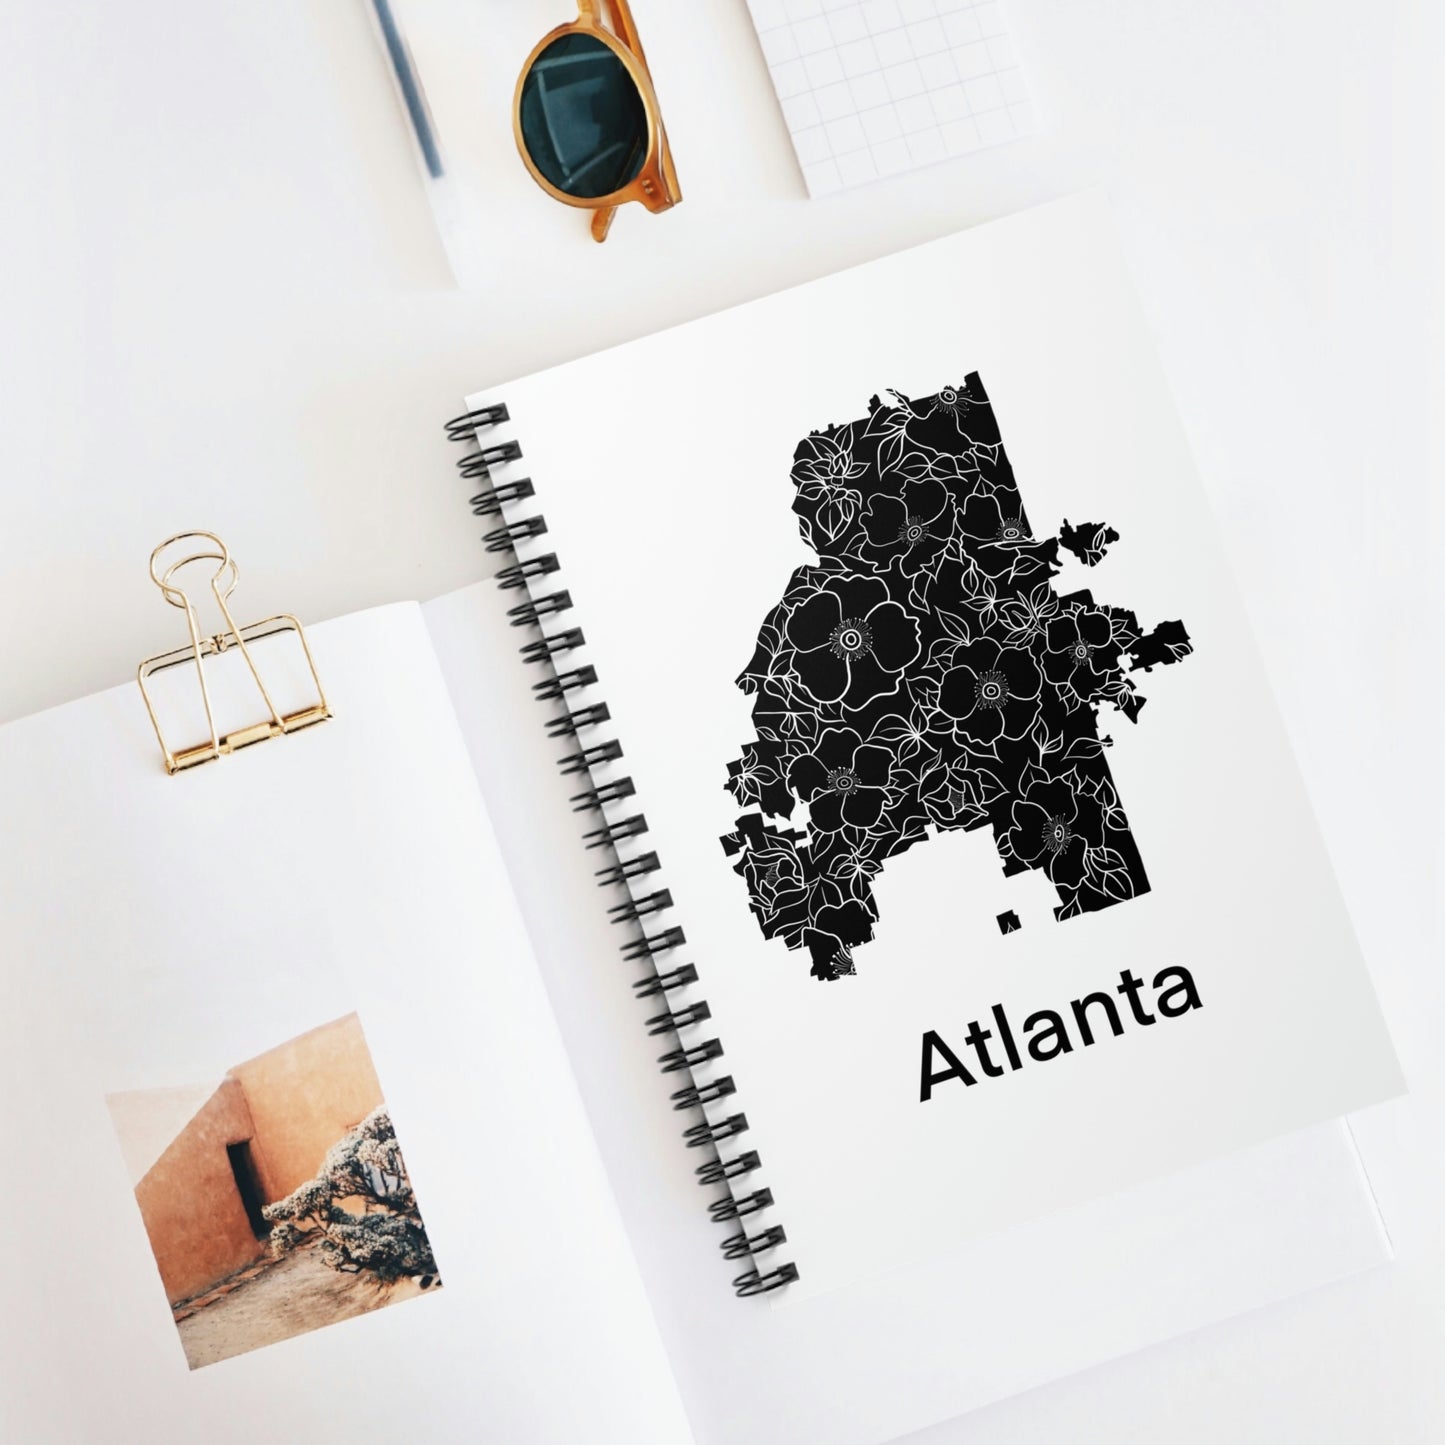 Flowering Atlanta Black Spiral Notebook - Ruled Line